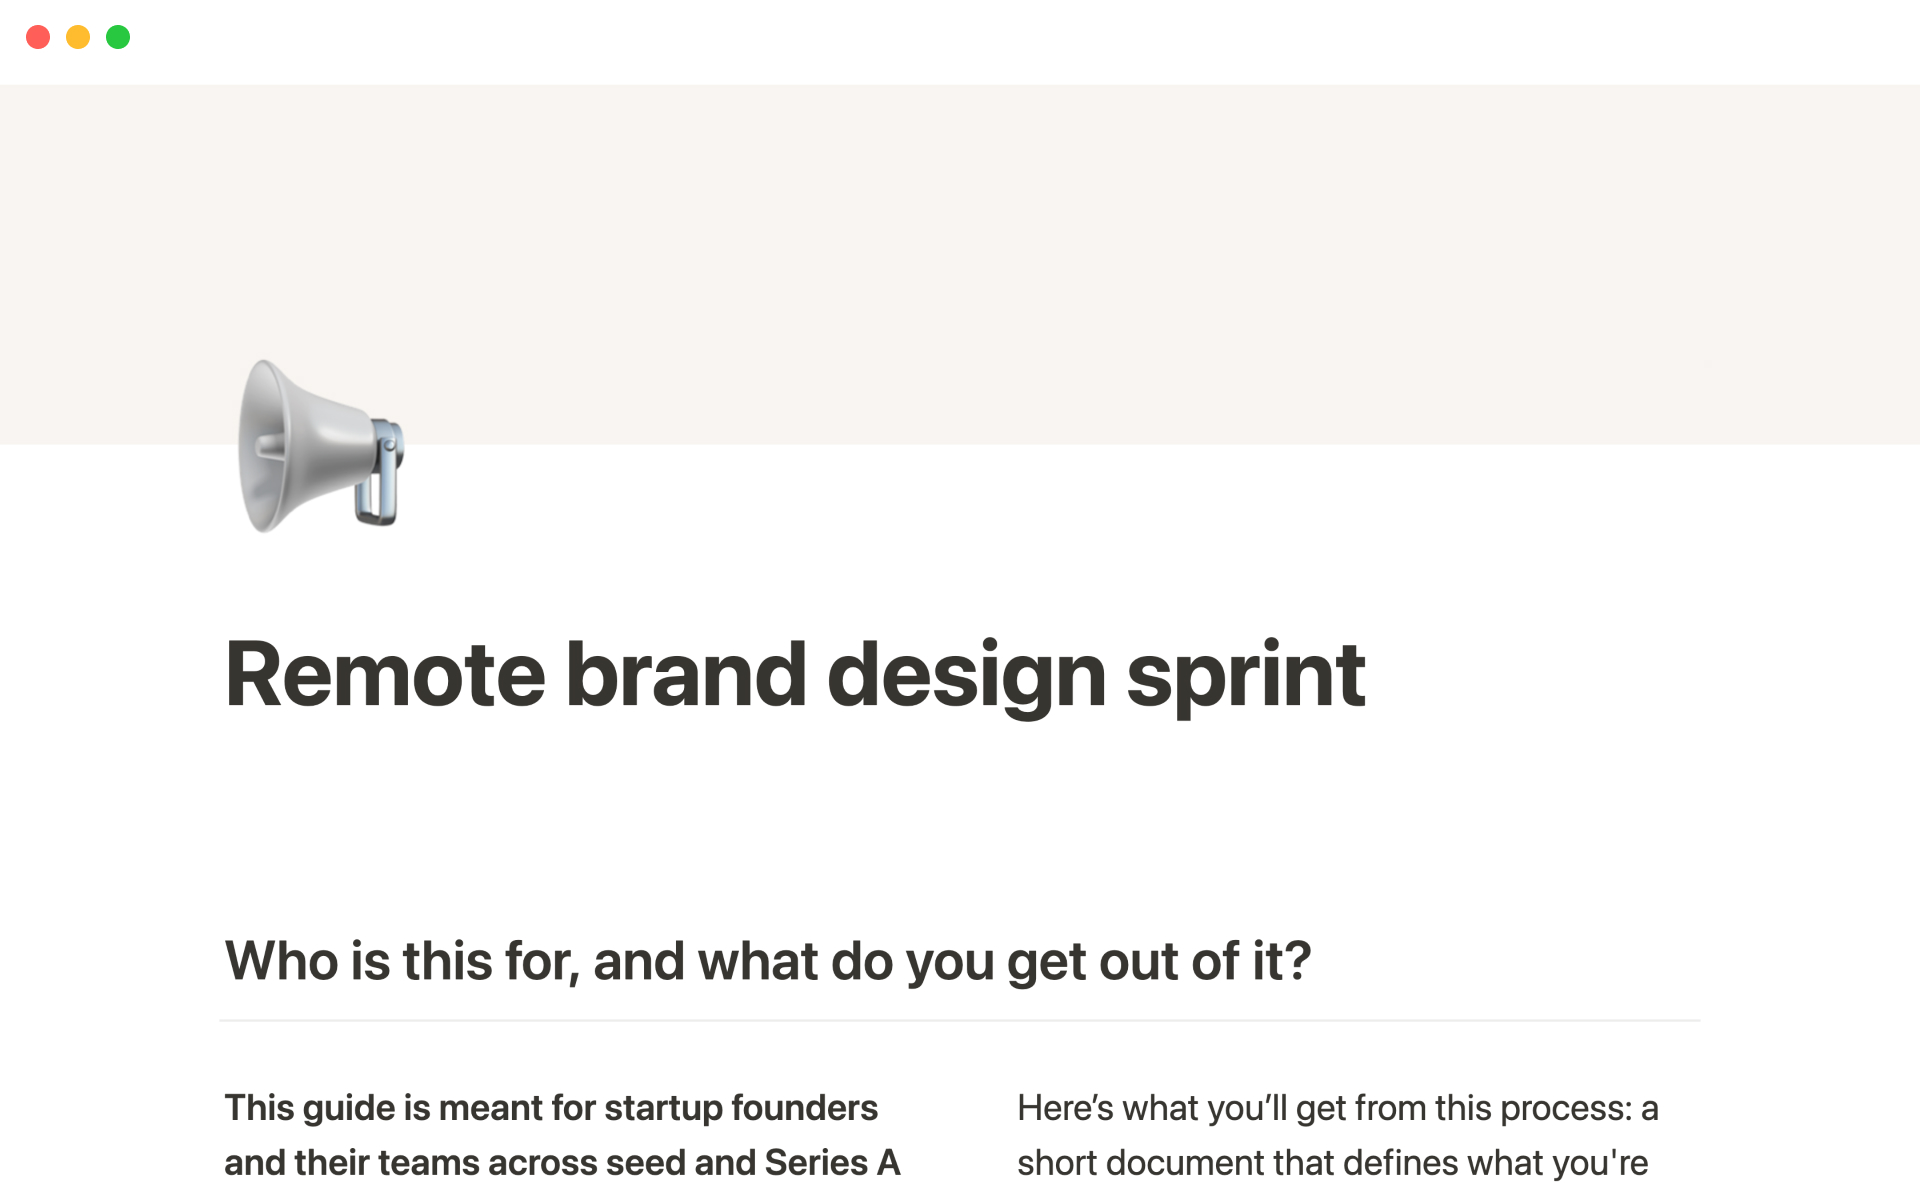 The desktop image for the Merci Grace's remote brand design sprint template